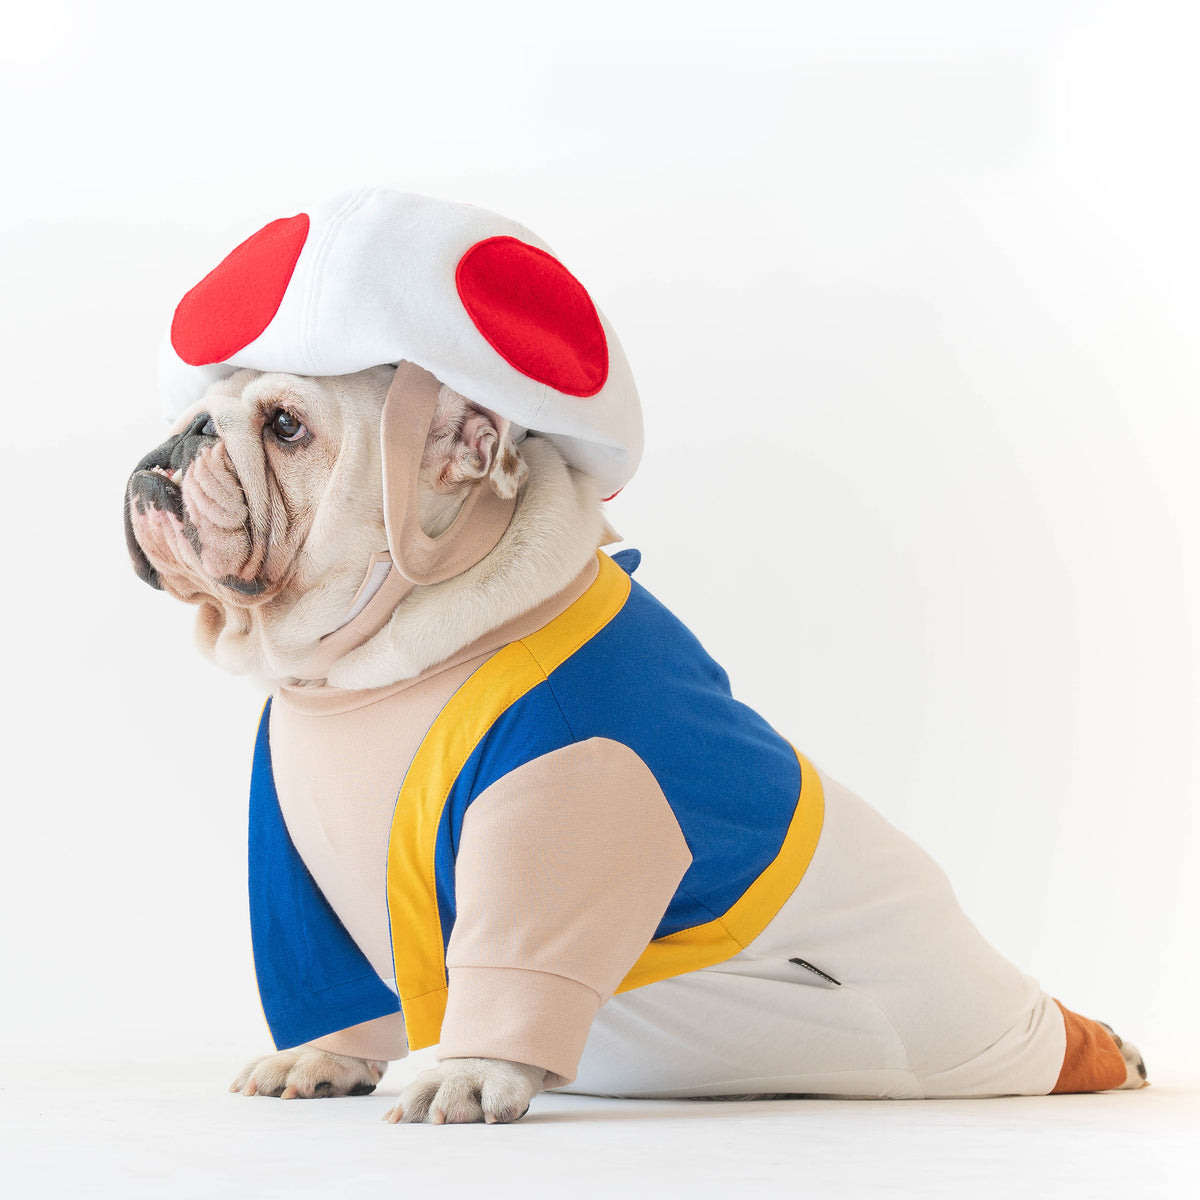 Mario dog costume